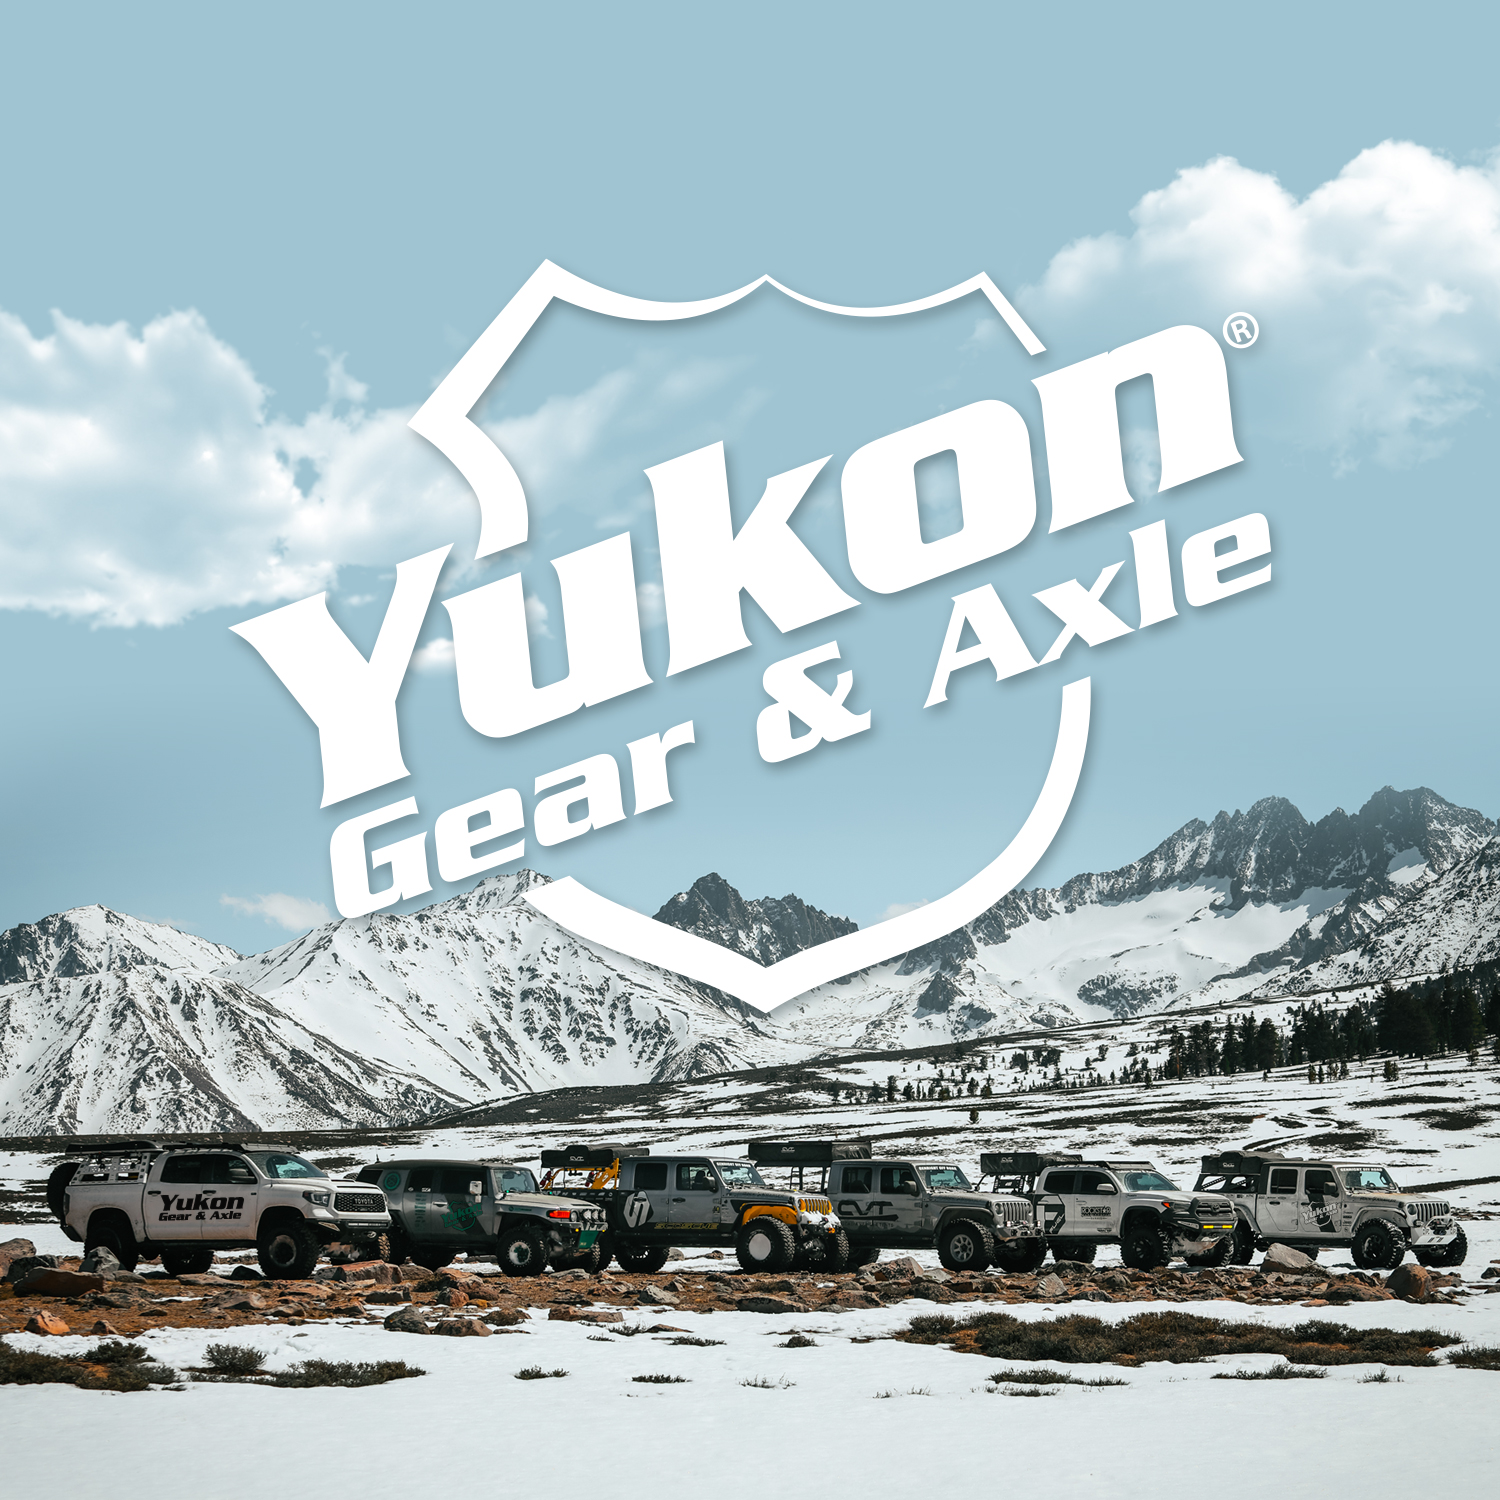 Yukon high performance Ring & Pinion replacement gear set, Dana 30, 3.08 ratio 